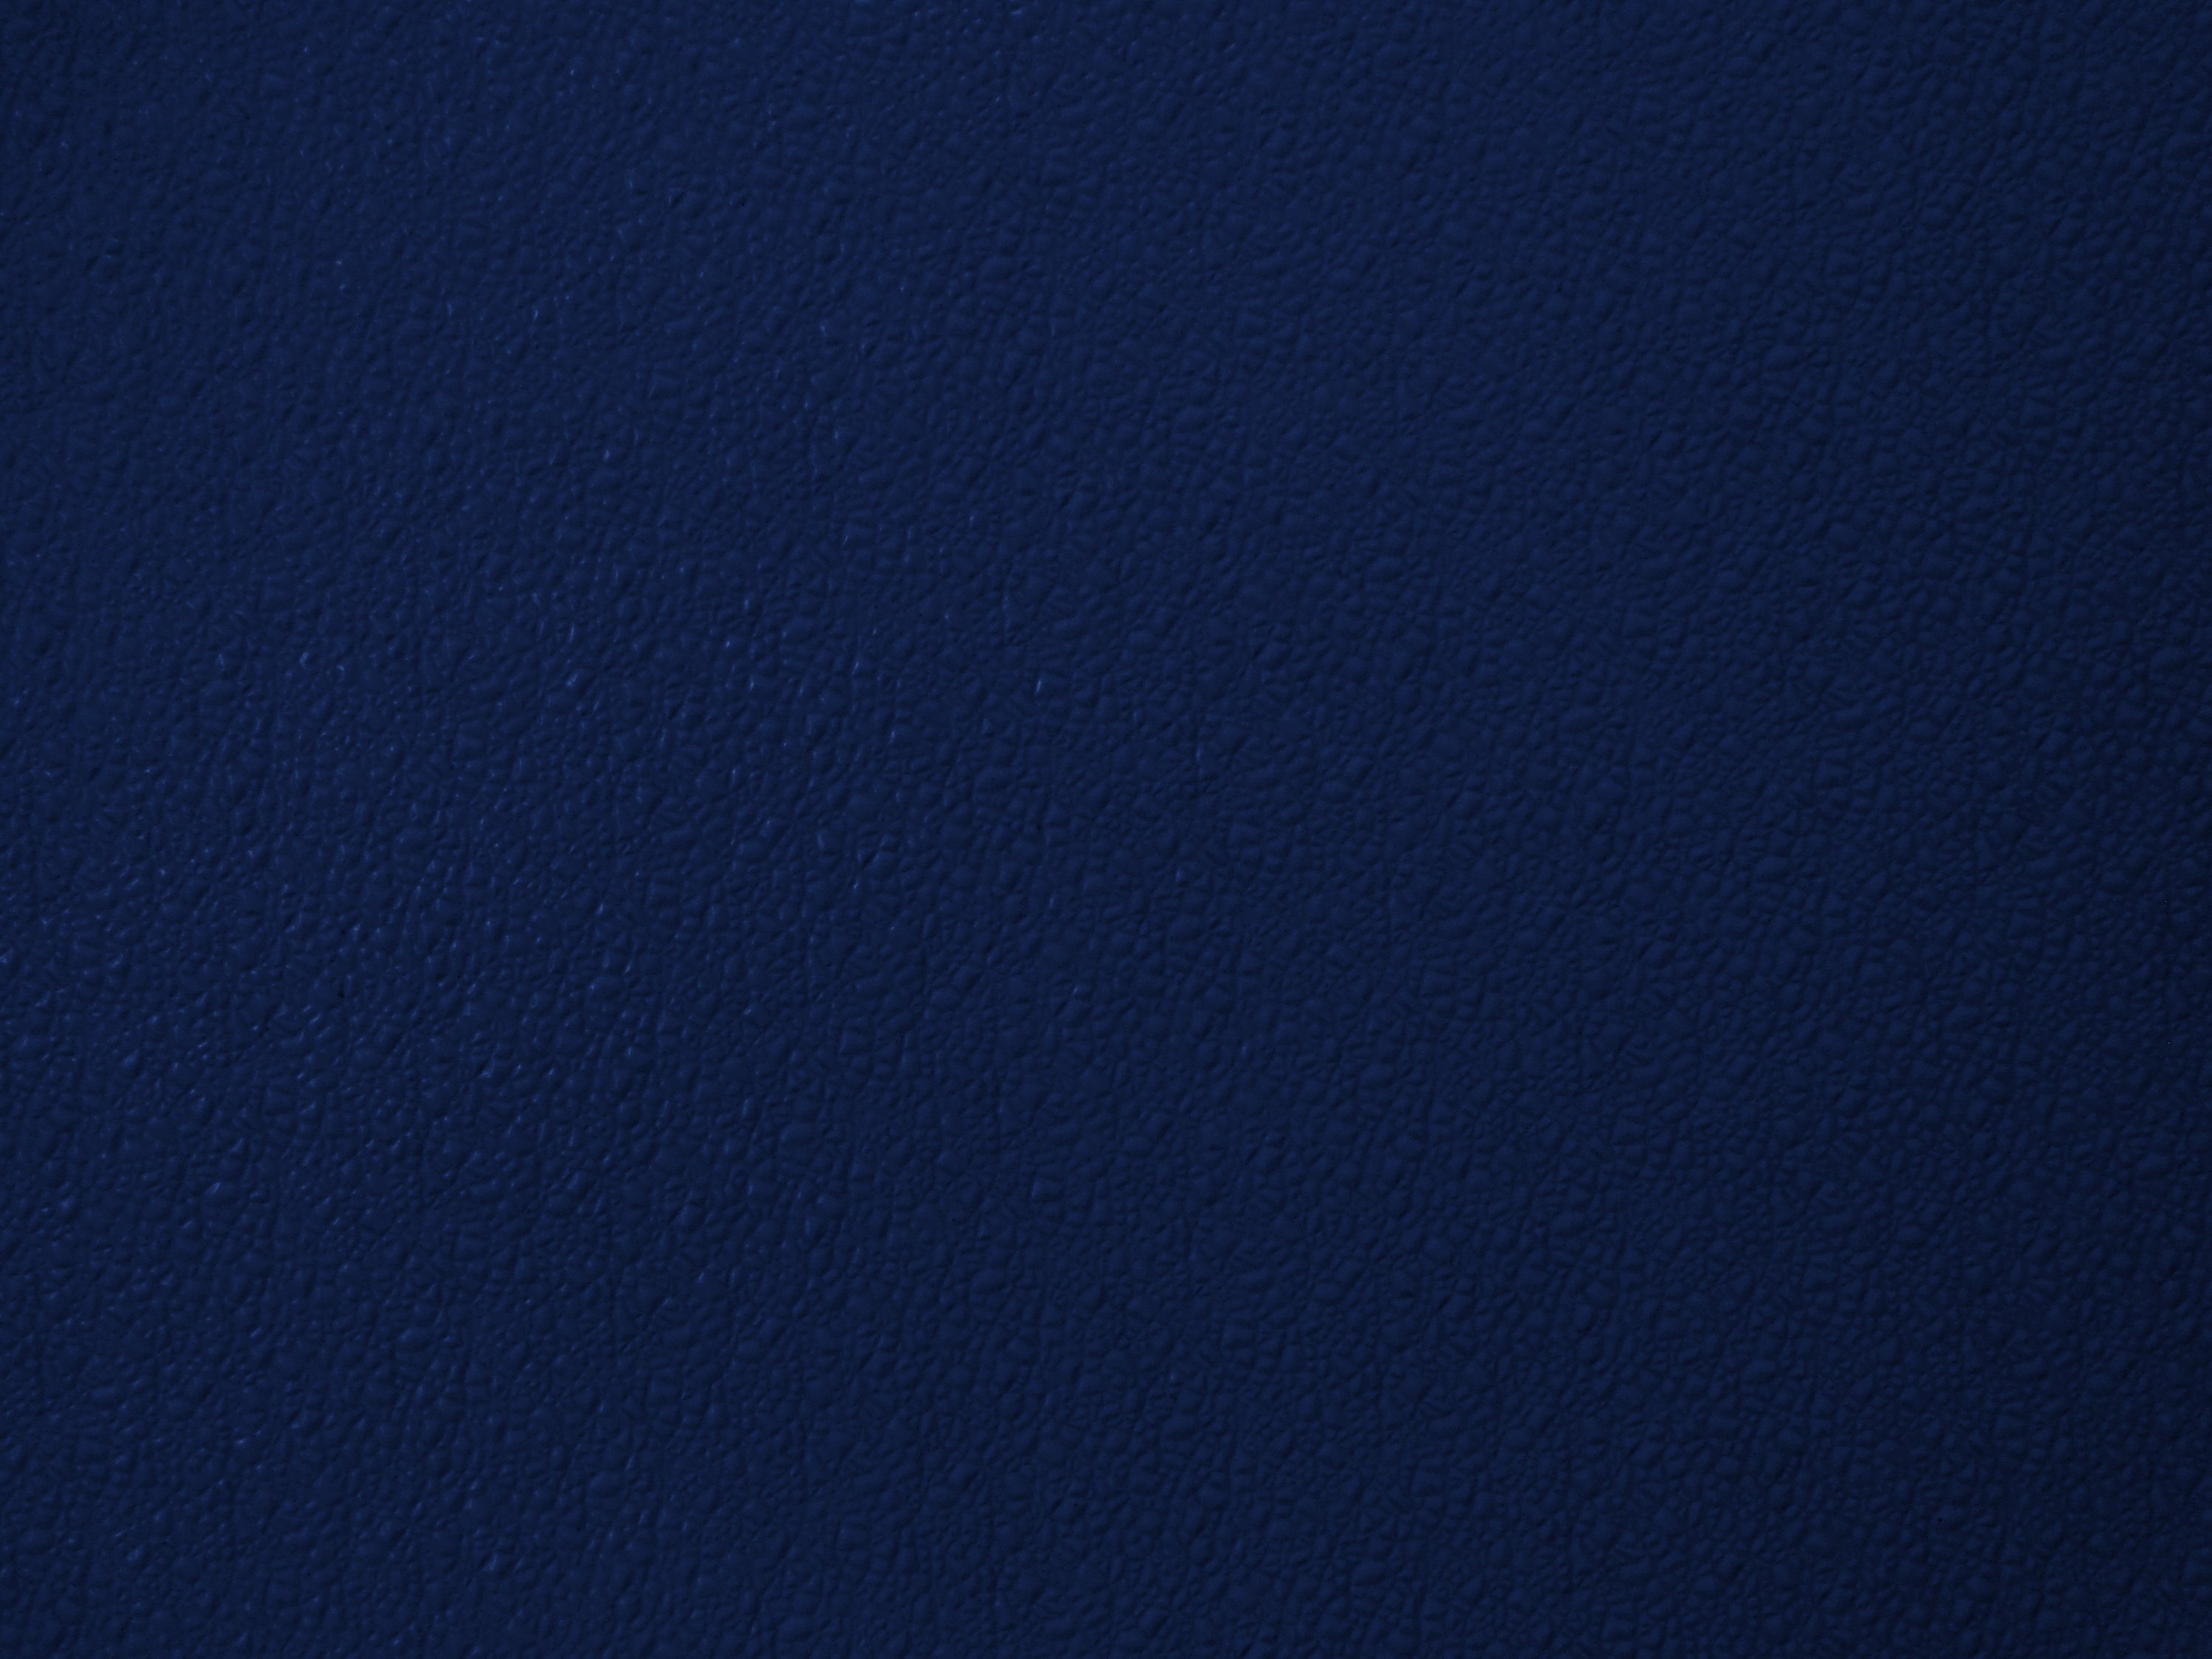 Dark Blue Background Texture Bumpy Navy Plastic